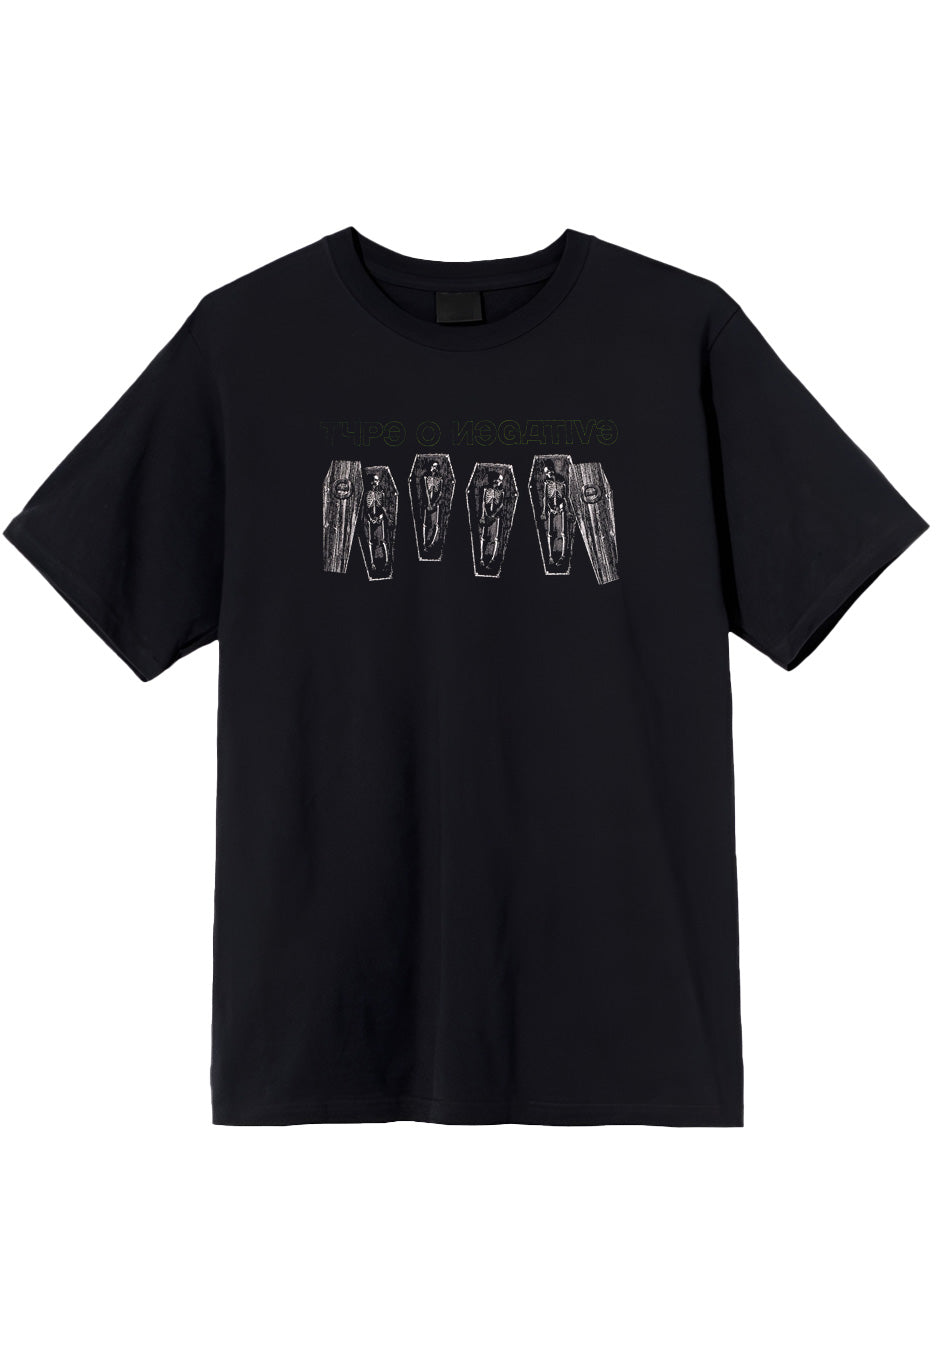 Type O Negative - Dead Again Coffins - T-Shirt